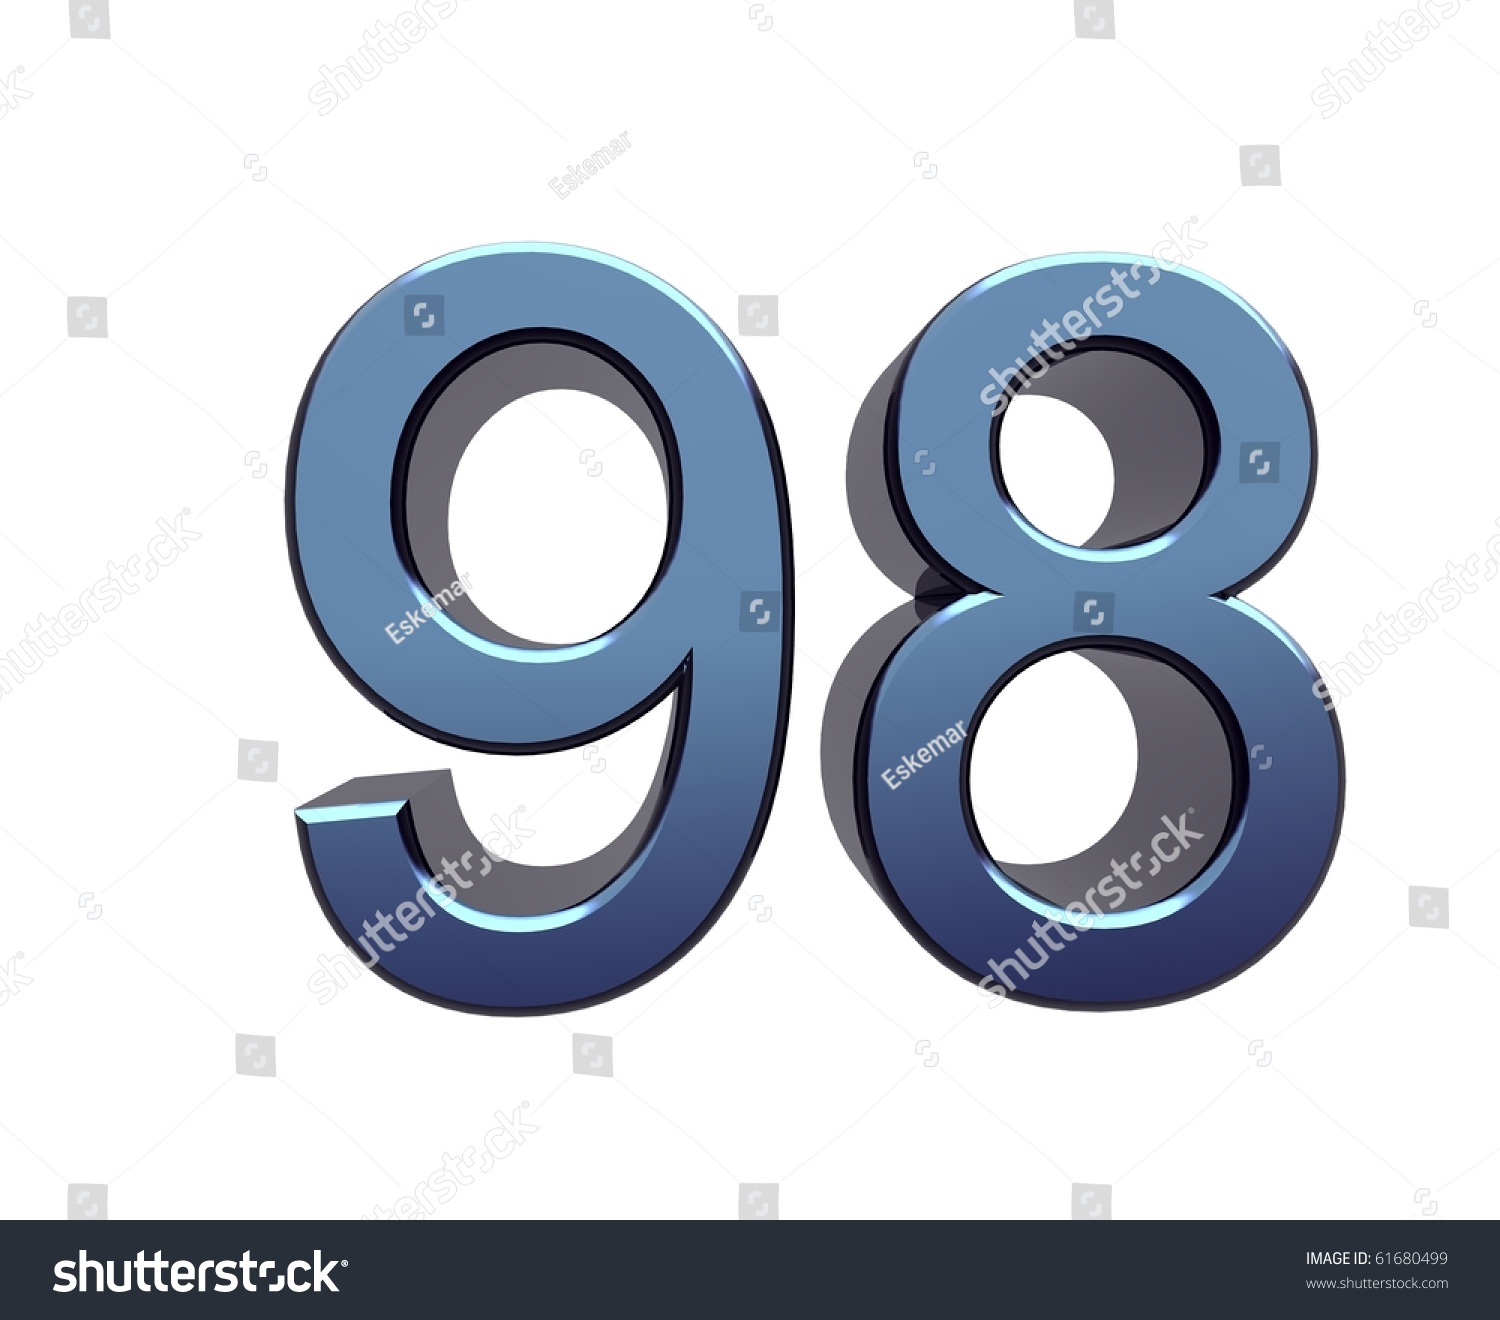 blue-number-98-stock-illustration-61680499-shutterstock